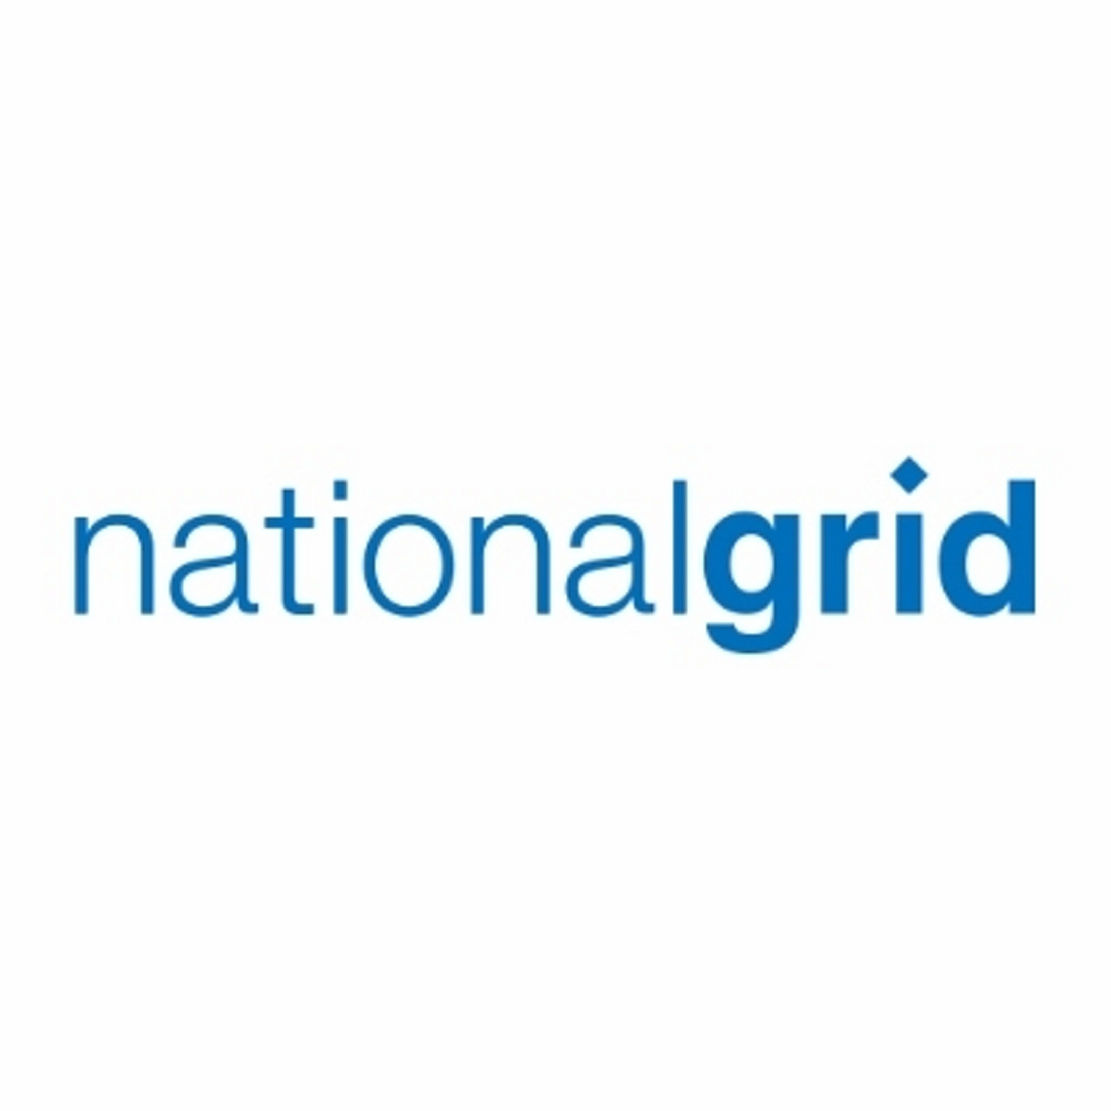 national grid jefferson county ny